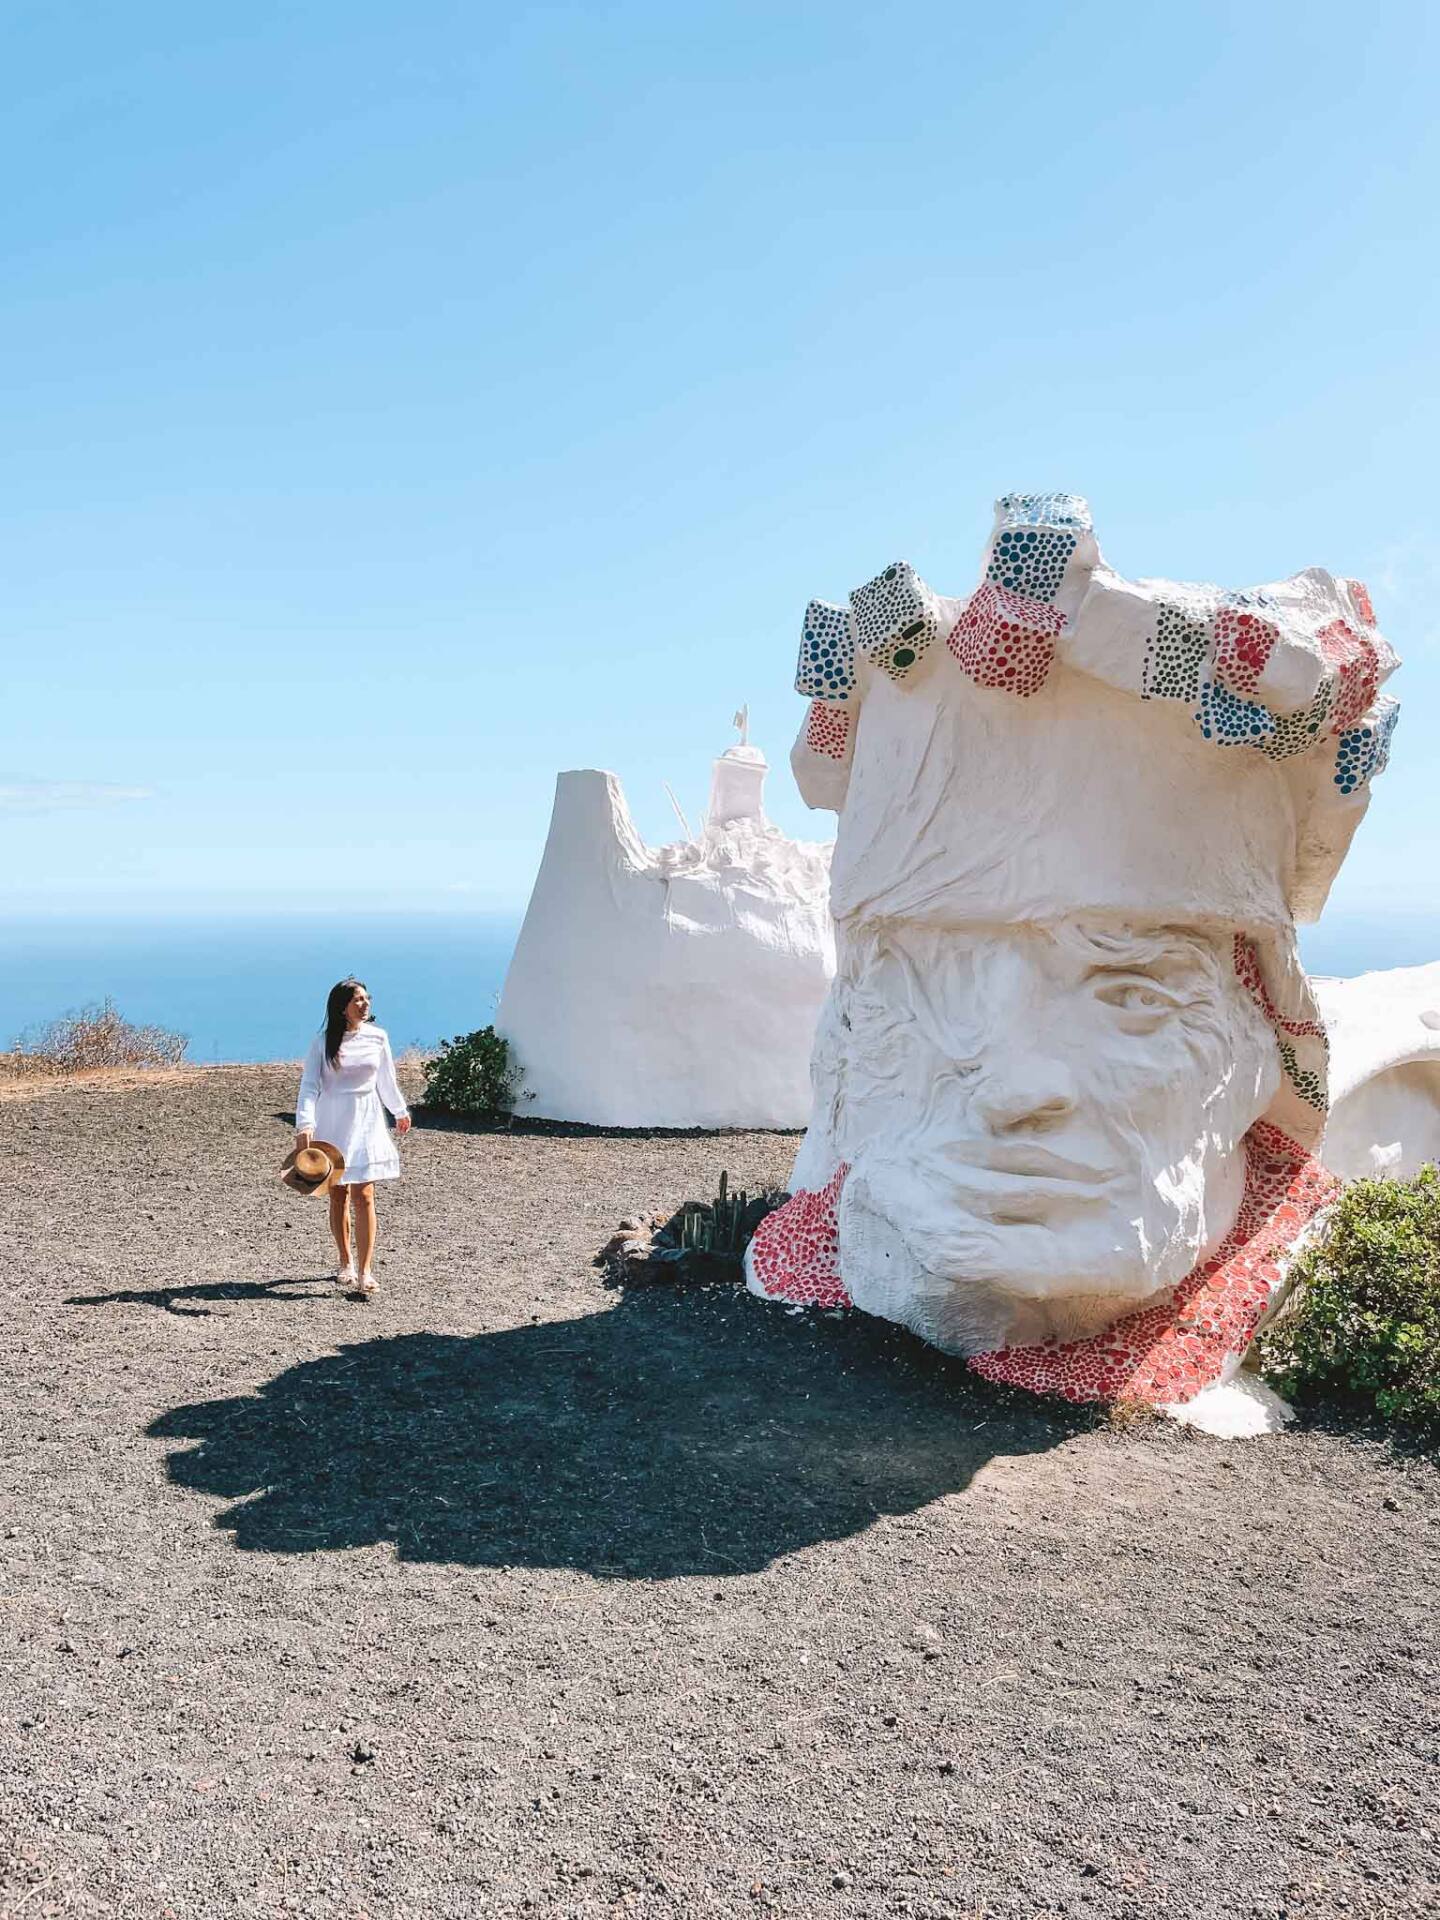 Best Instagram spots in El Hierro Canary Islands - Homenaje a La Bajada sculptures